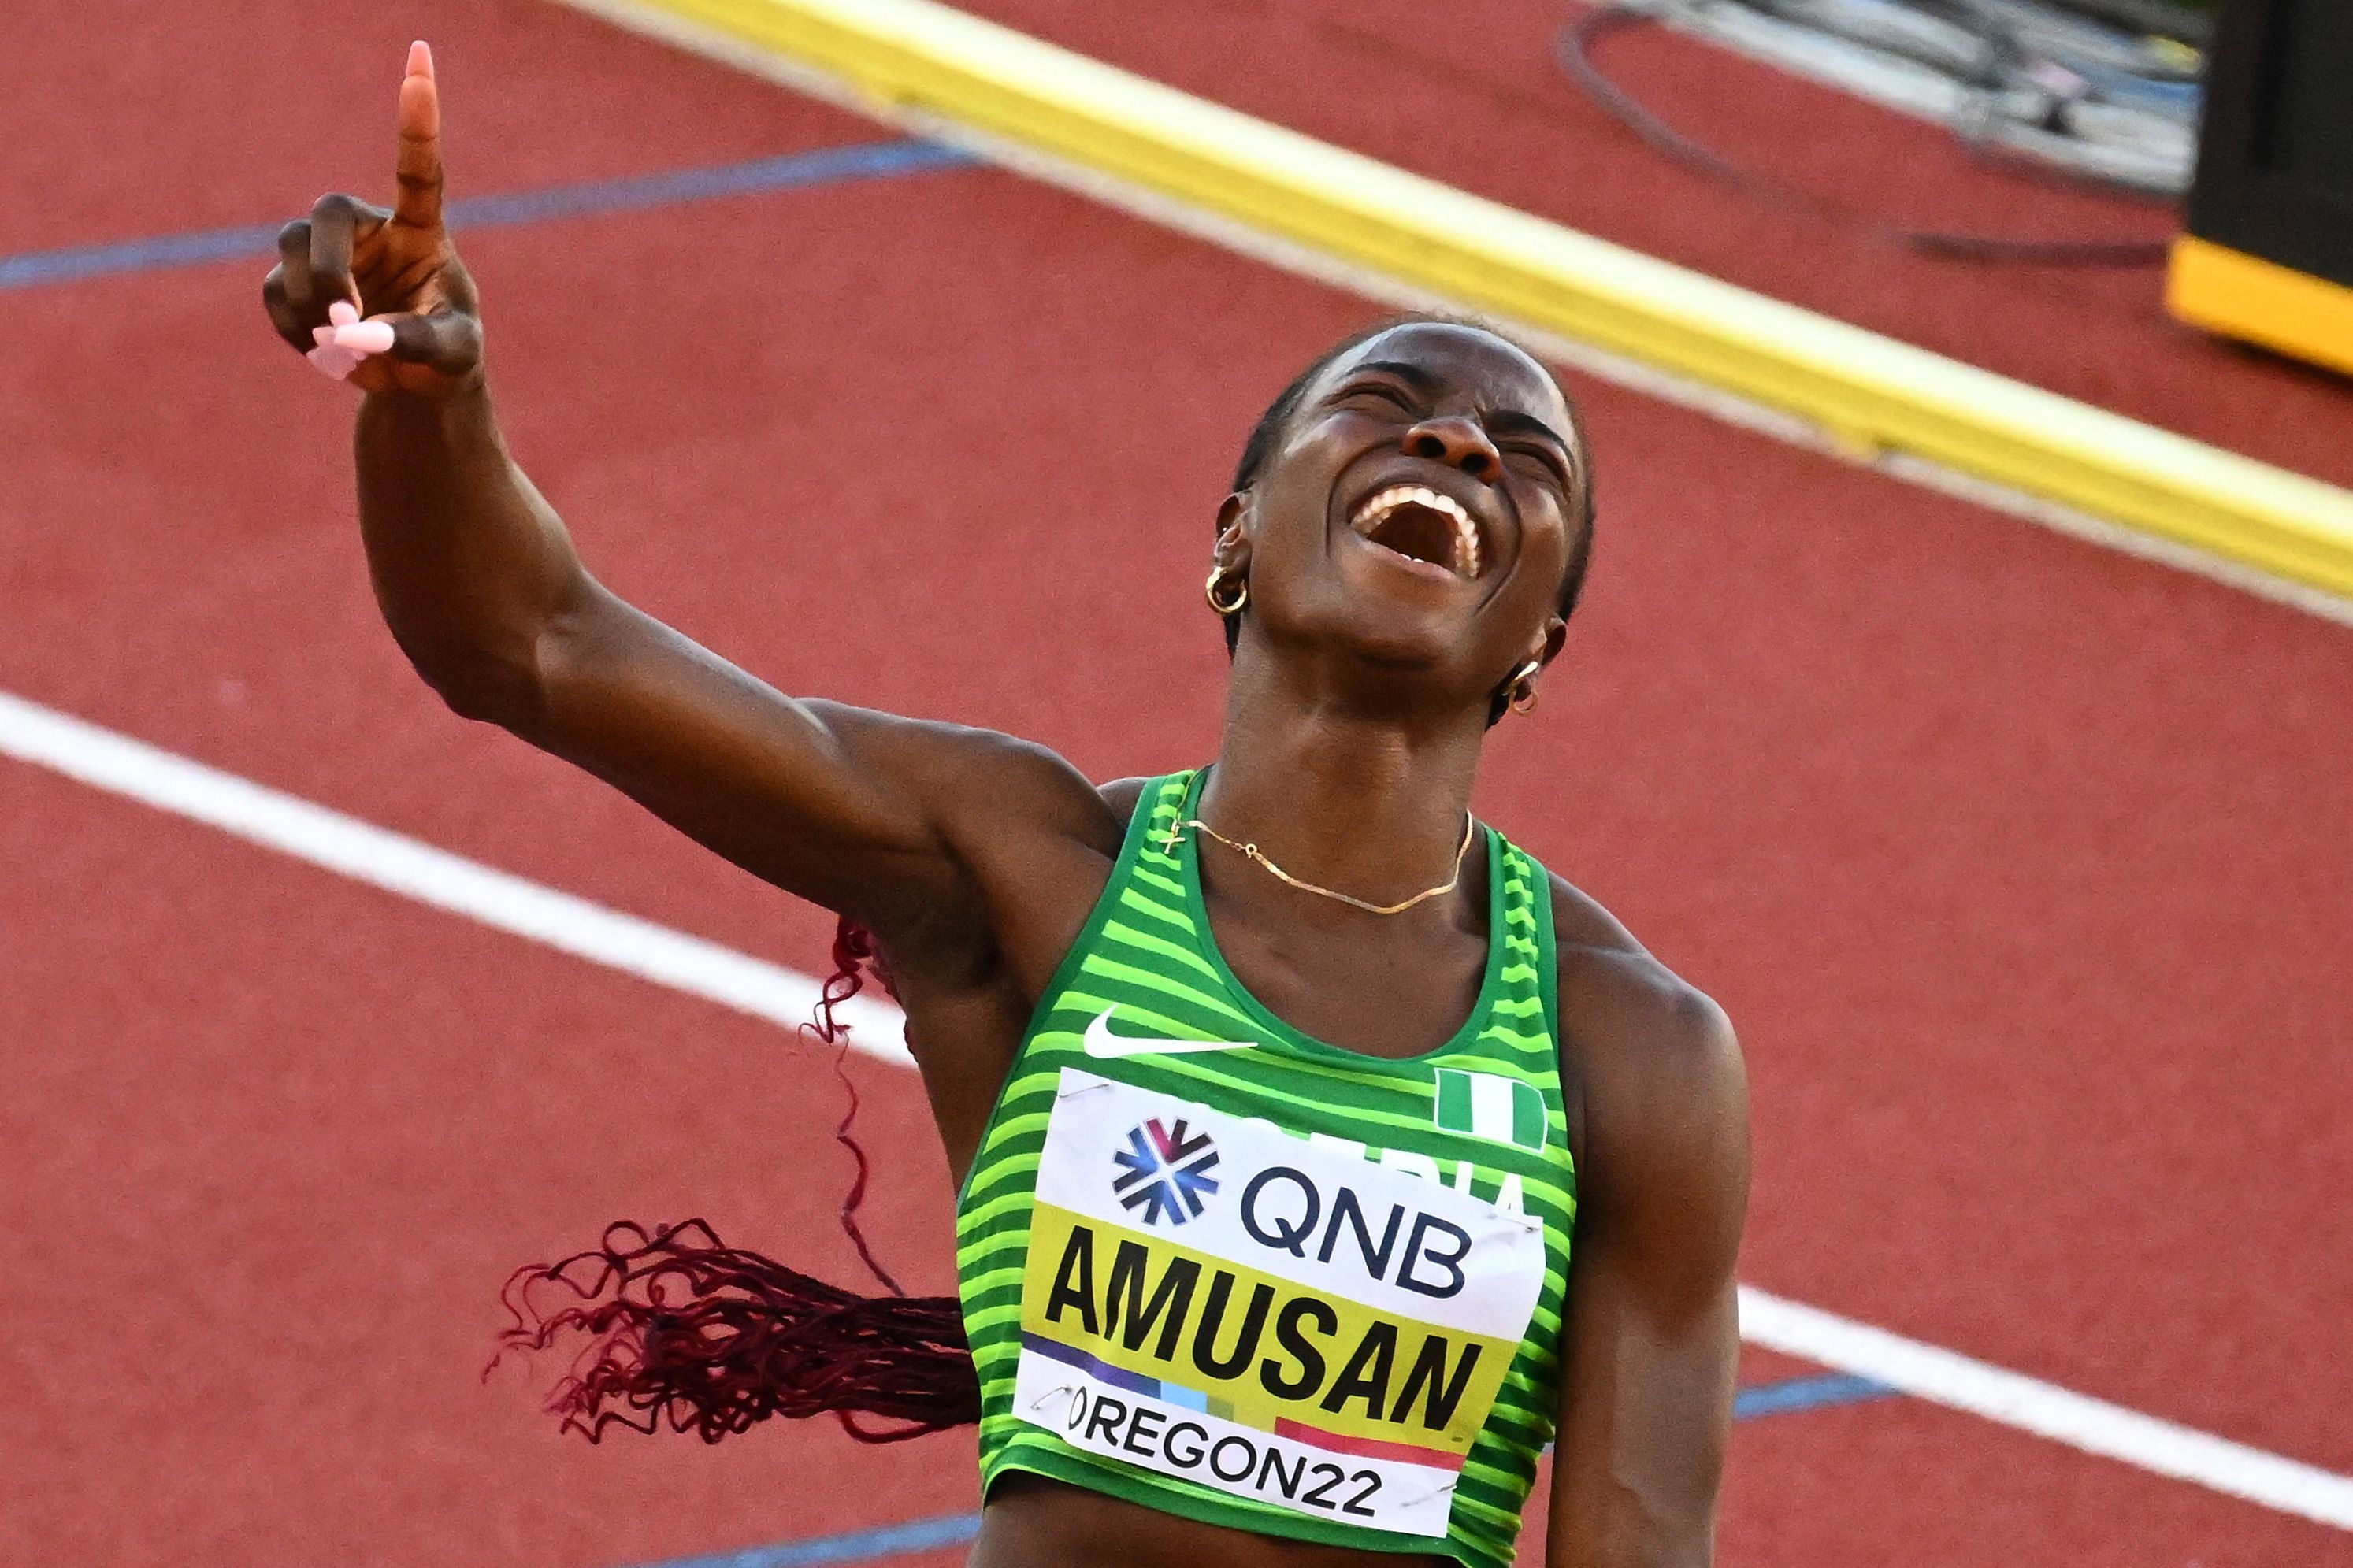 Amusan won gold in the 100m hurdles